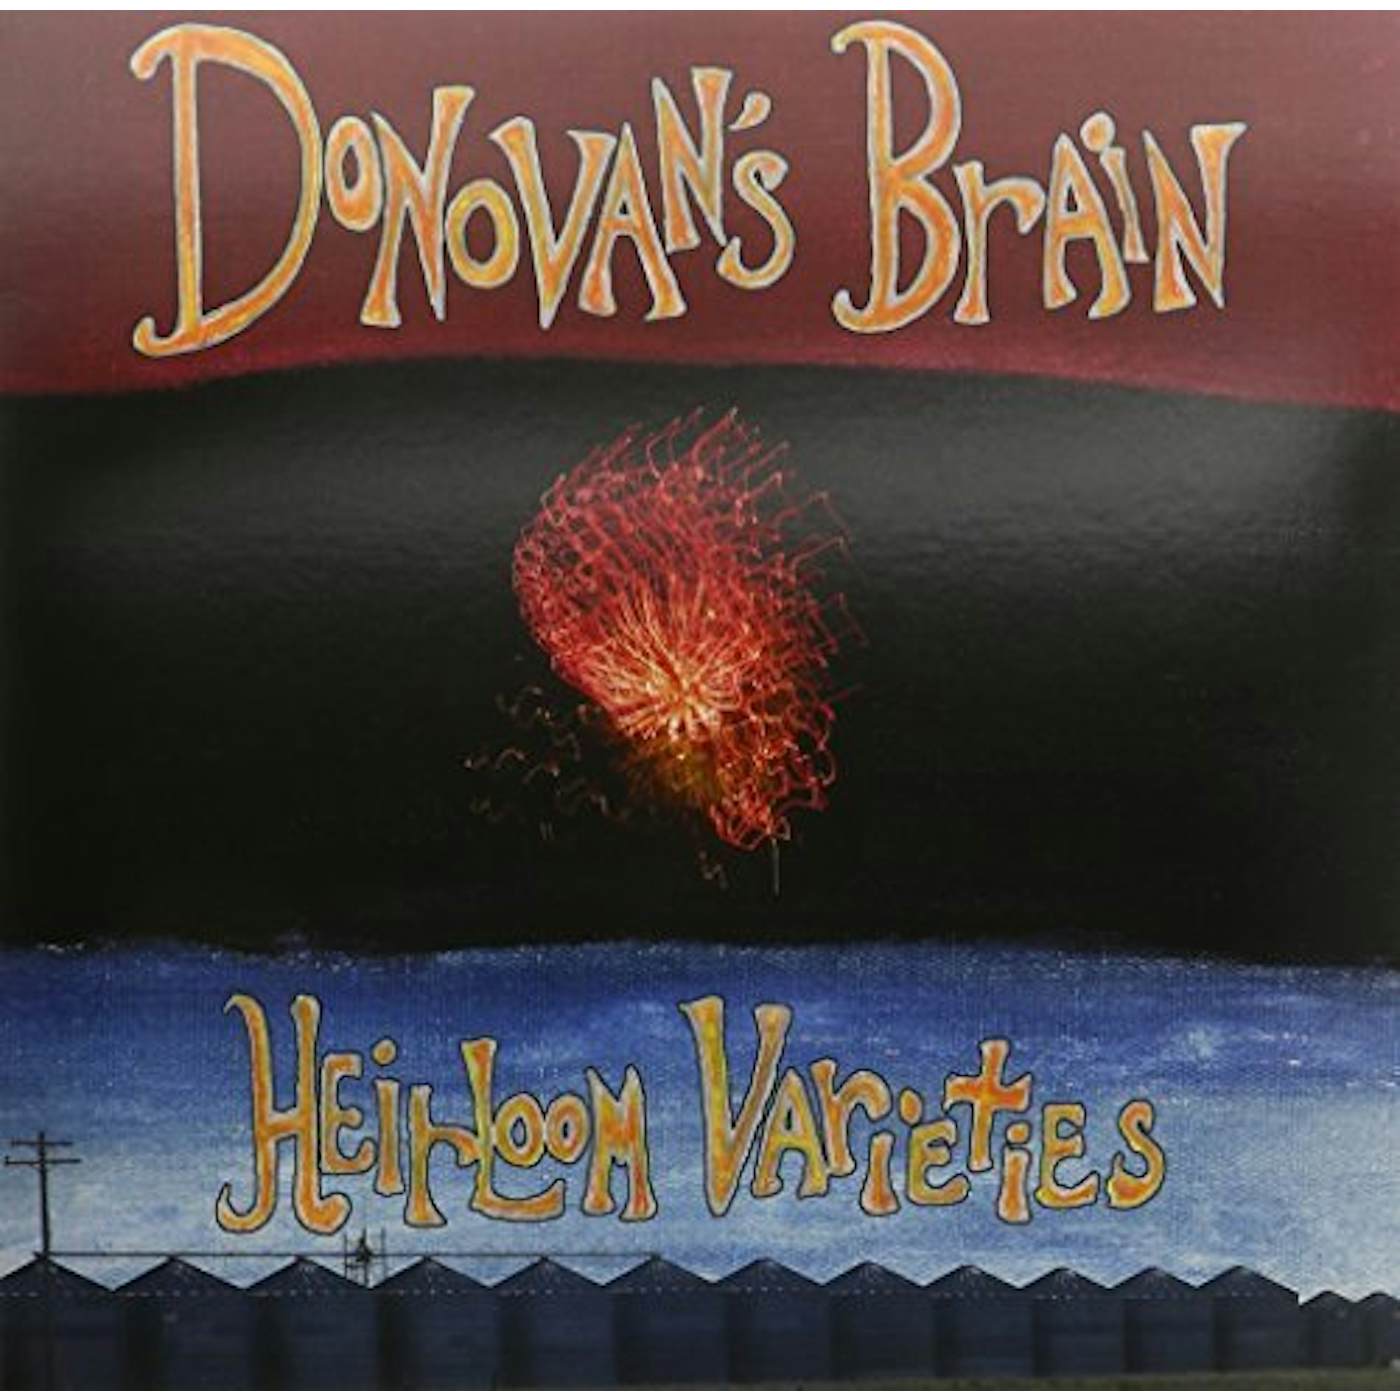 Donovan's Brain Heirloom Varieties Vinyl Record